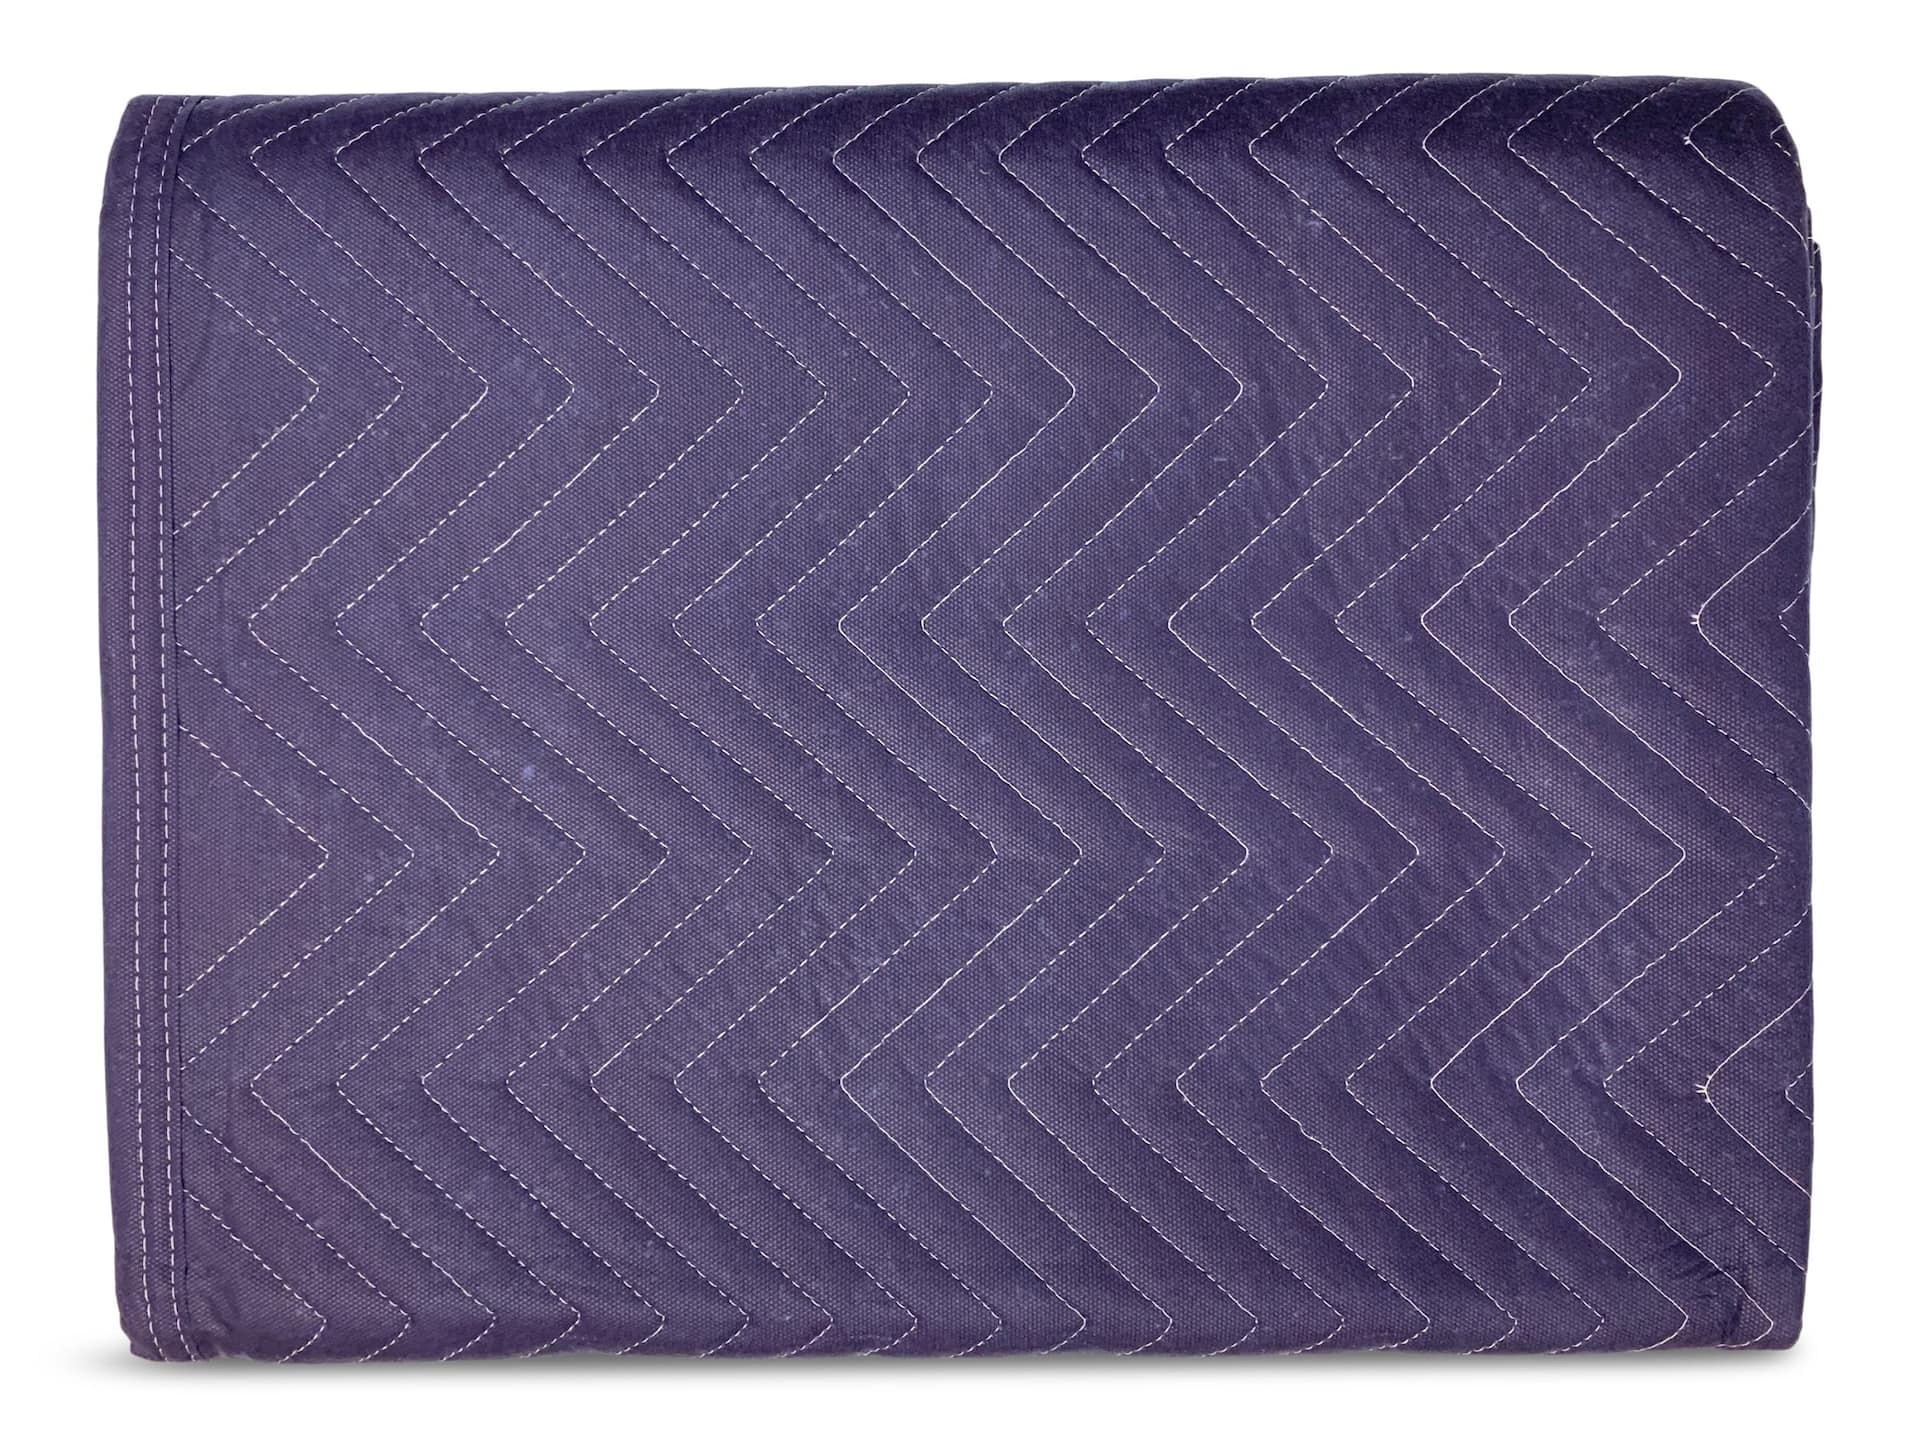 Certified Moving Blanket, 72-in x 80-in